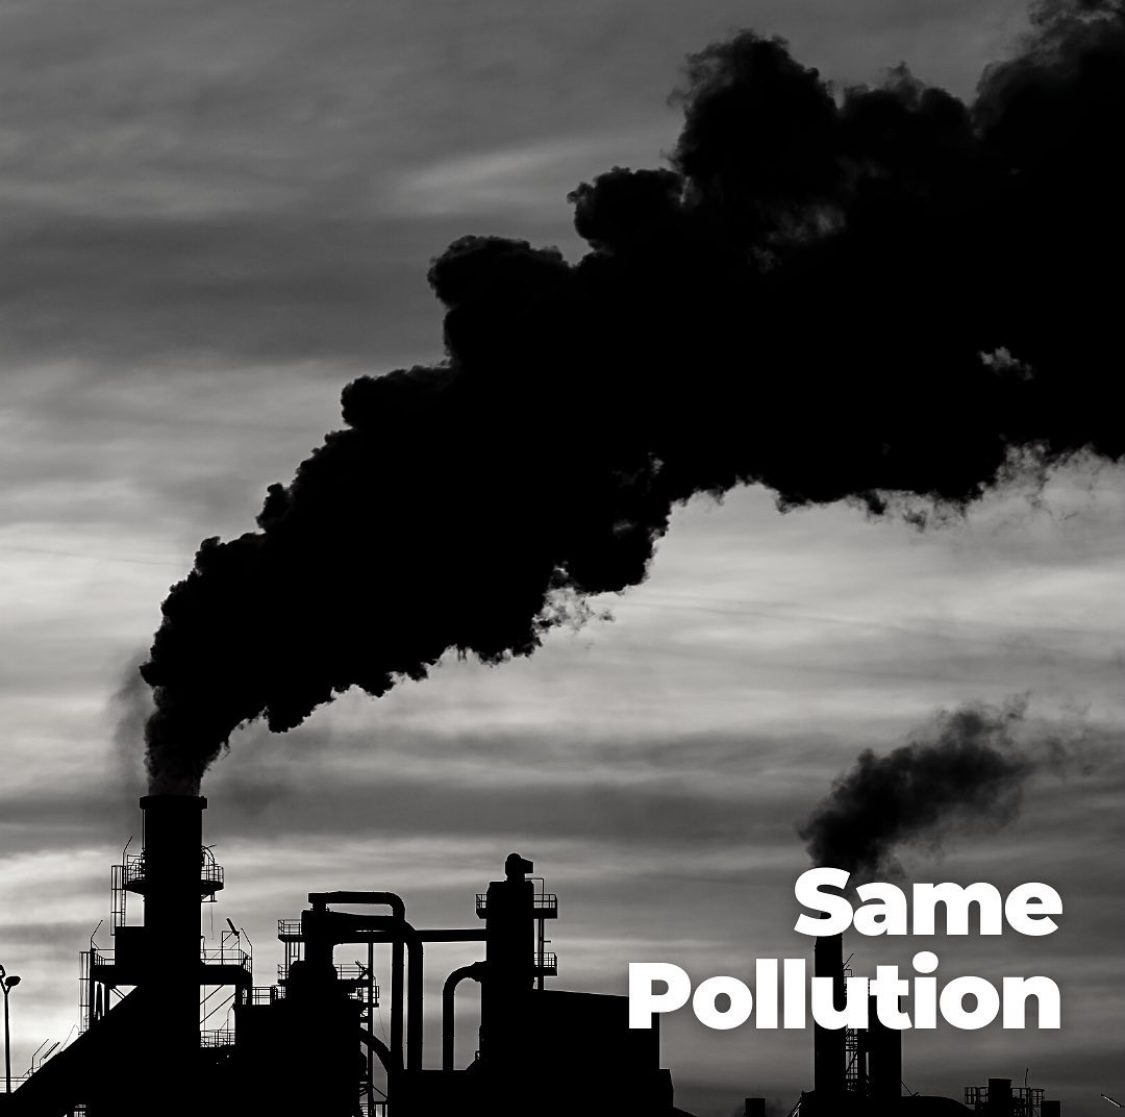 SAME pollution.